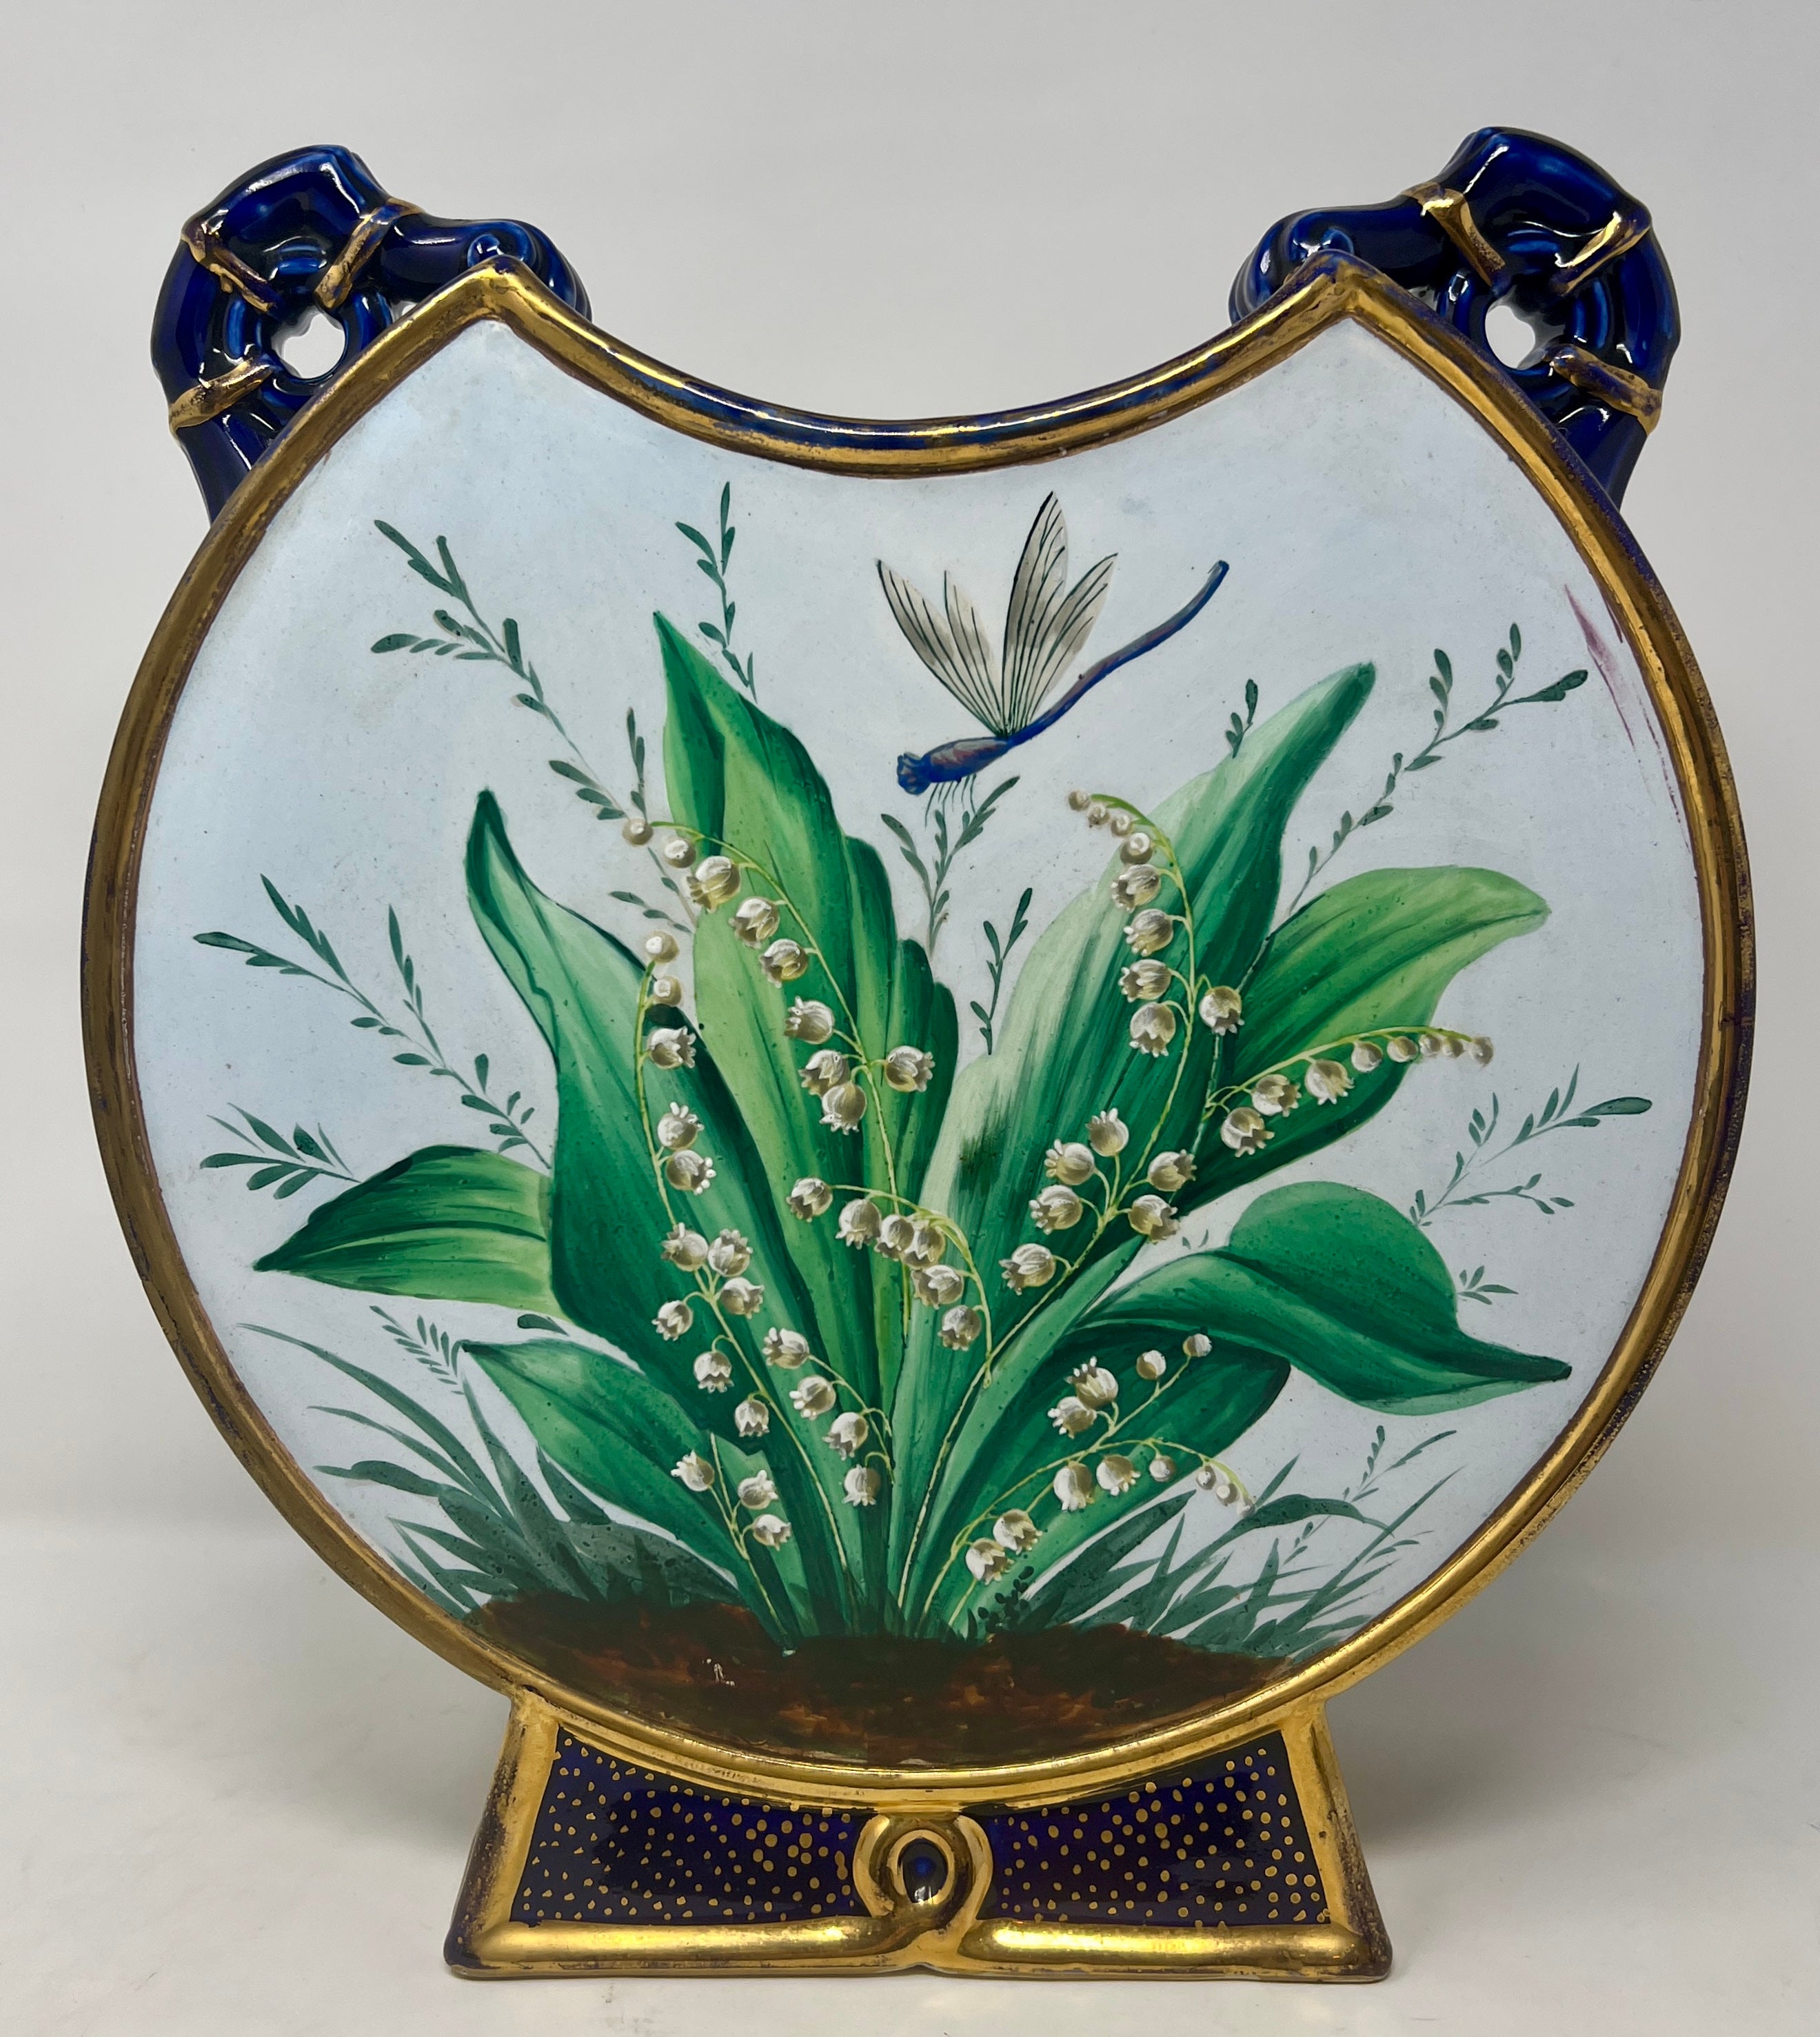 Handsome Antique English Cobalt Blue & Gold Porcelain Enameled Moon Vase, Circa 1880's
Wonderful hand-painted scenes on back and front with intricate golf-leaf details. Maker's stamp at bottom.